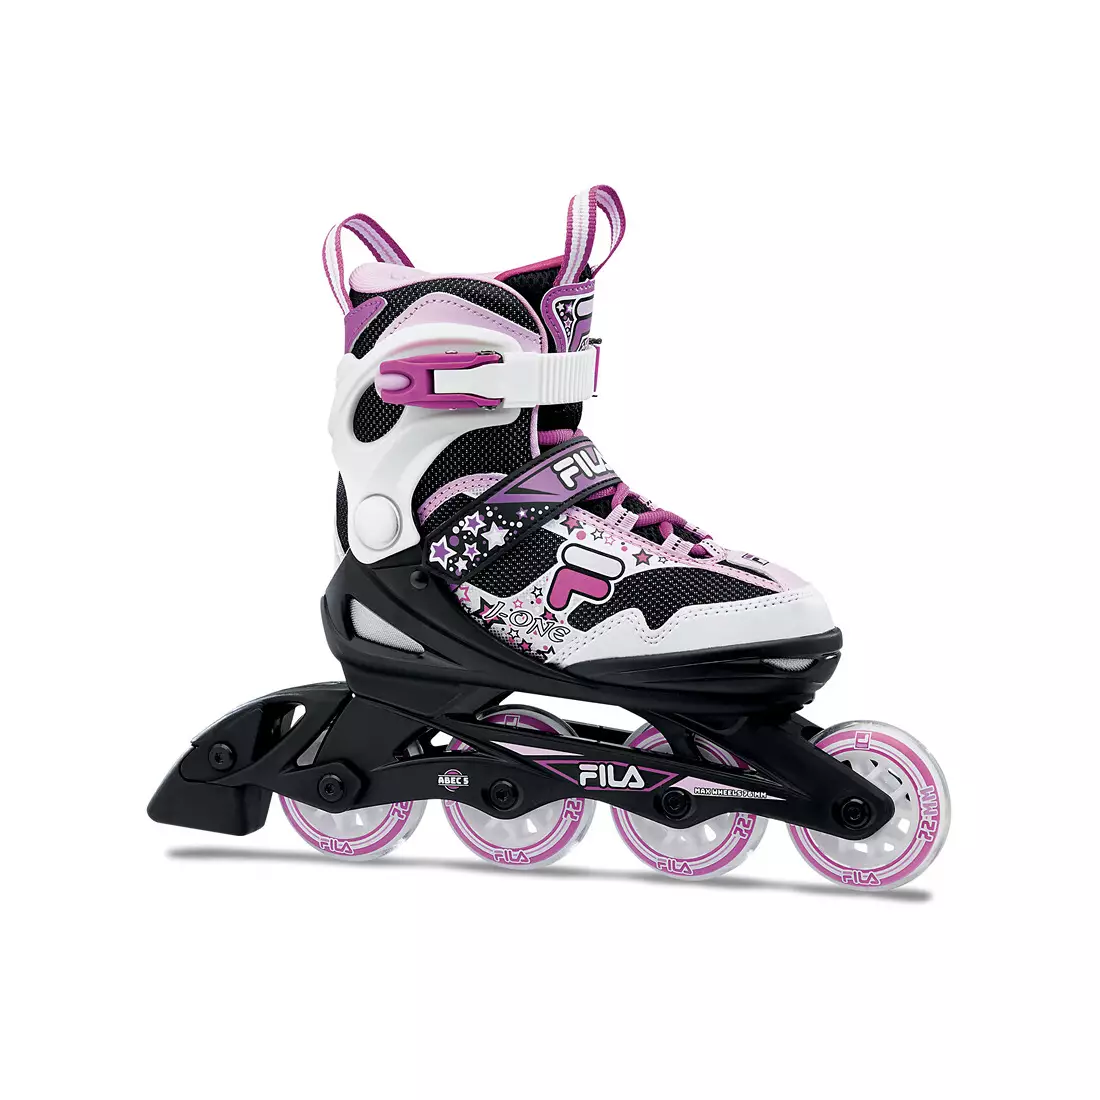 FILA SKATES children's inline skates X-ONE G black/pink 010620145